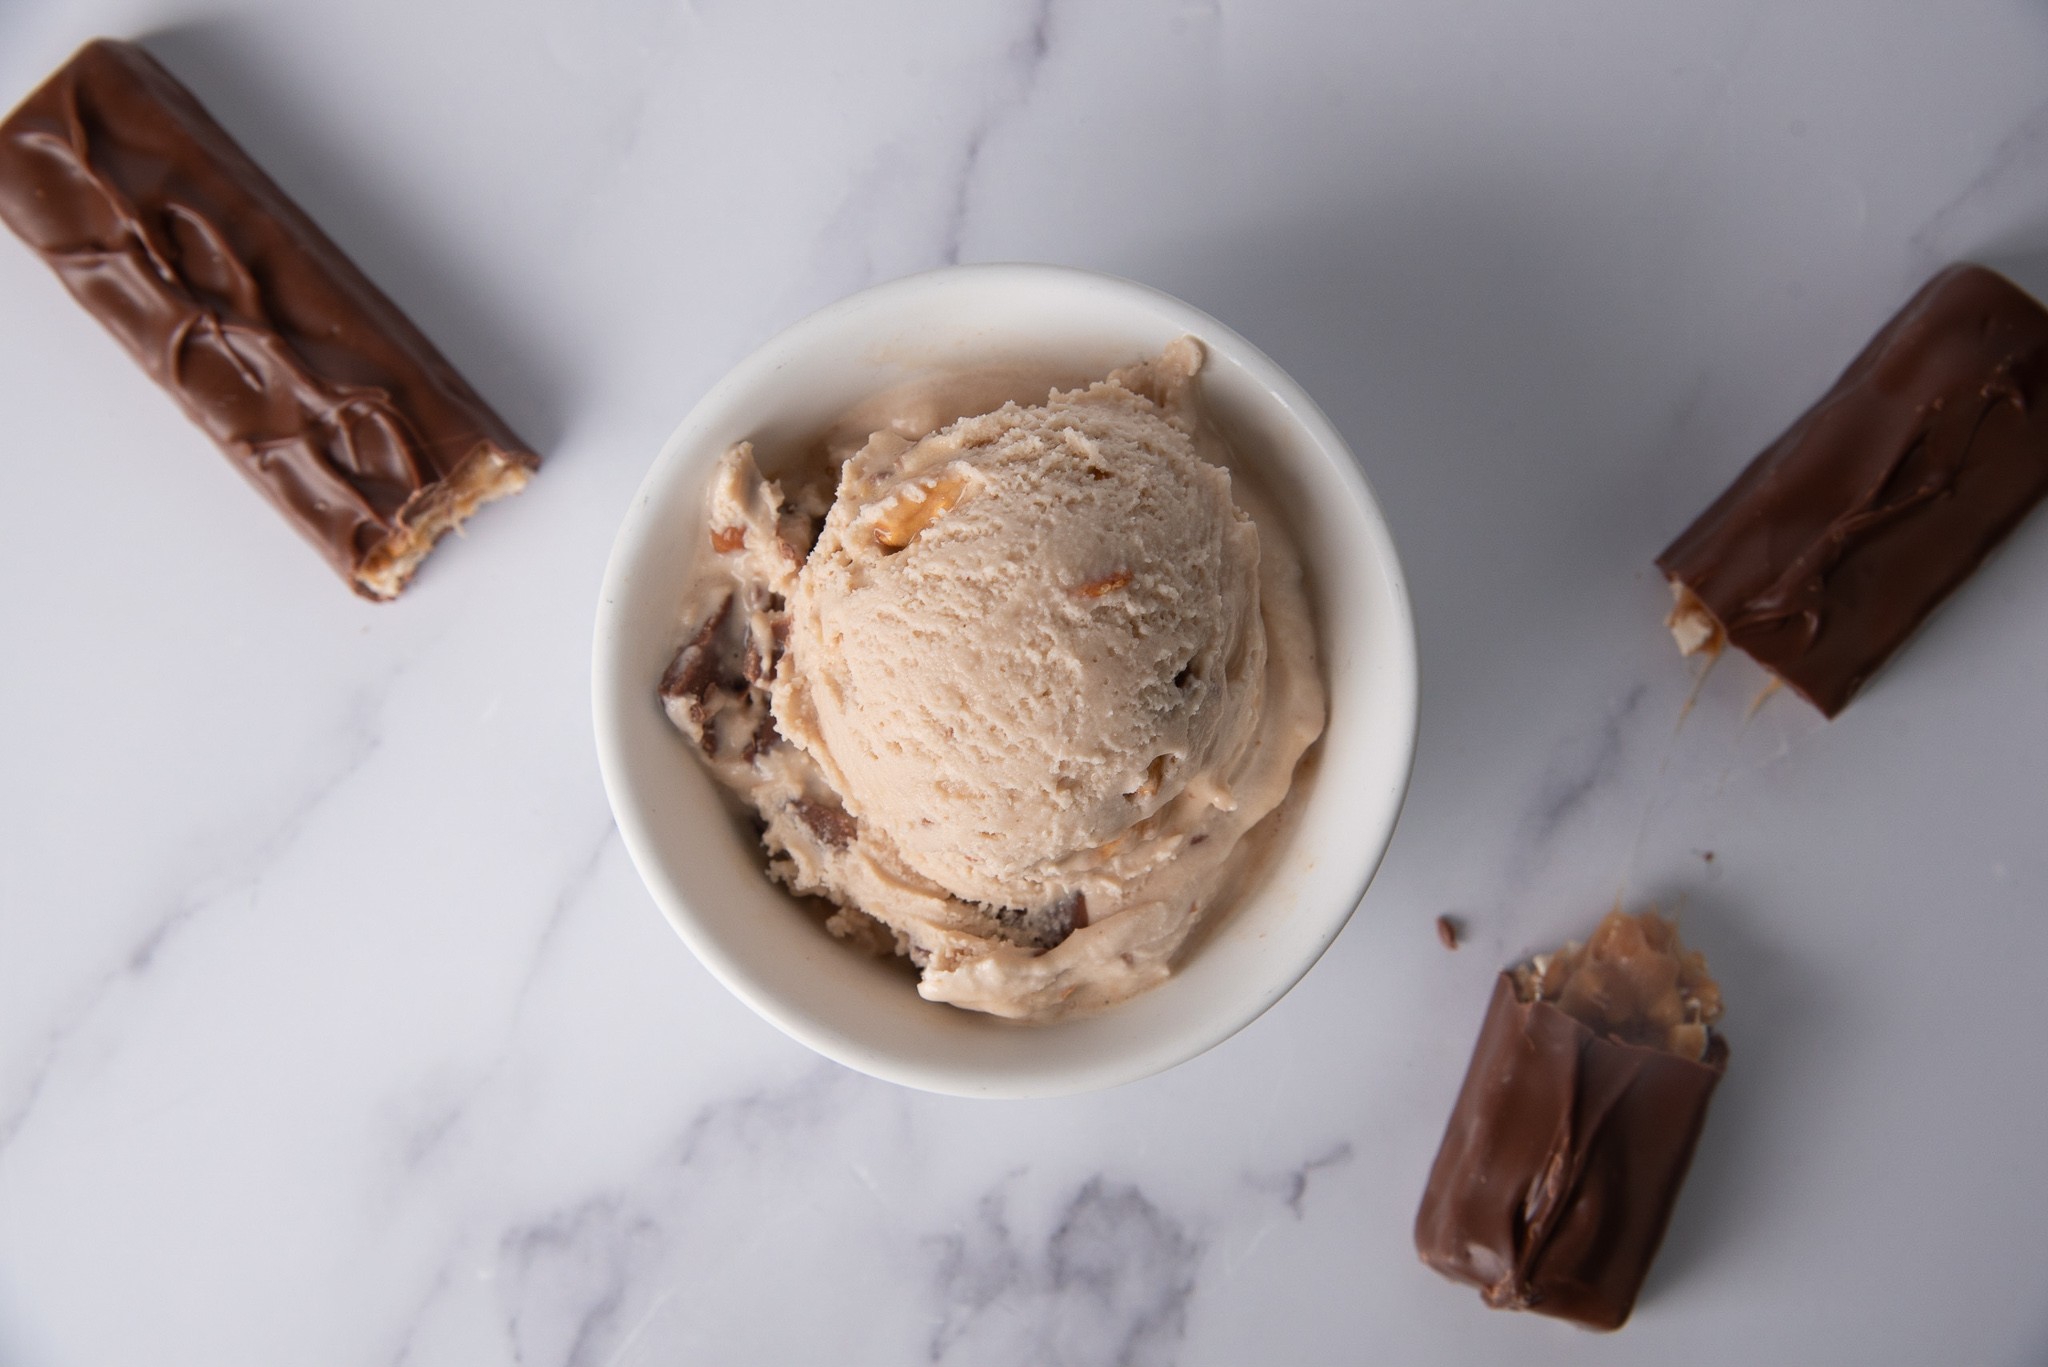 Graeter’s Ice Cream Releases Fourth of Five LimitedTime Bonus Flavors